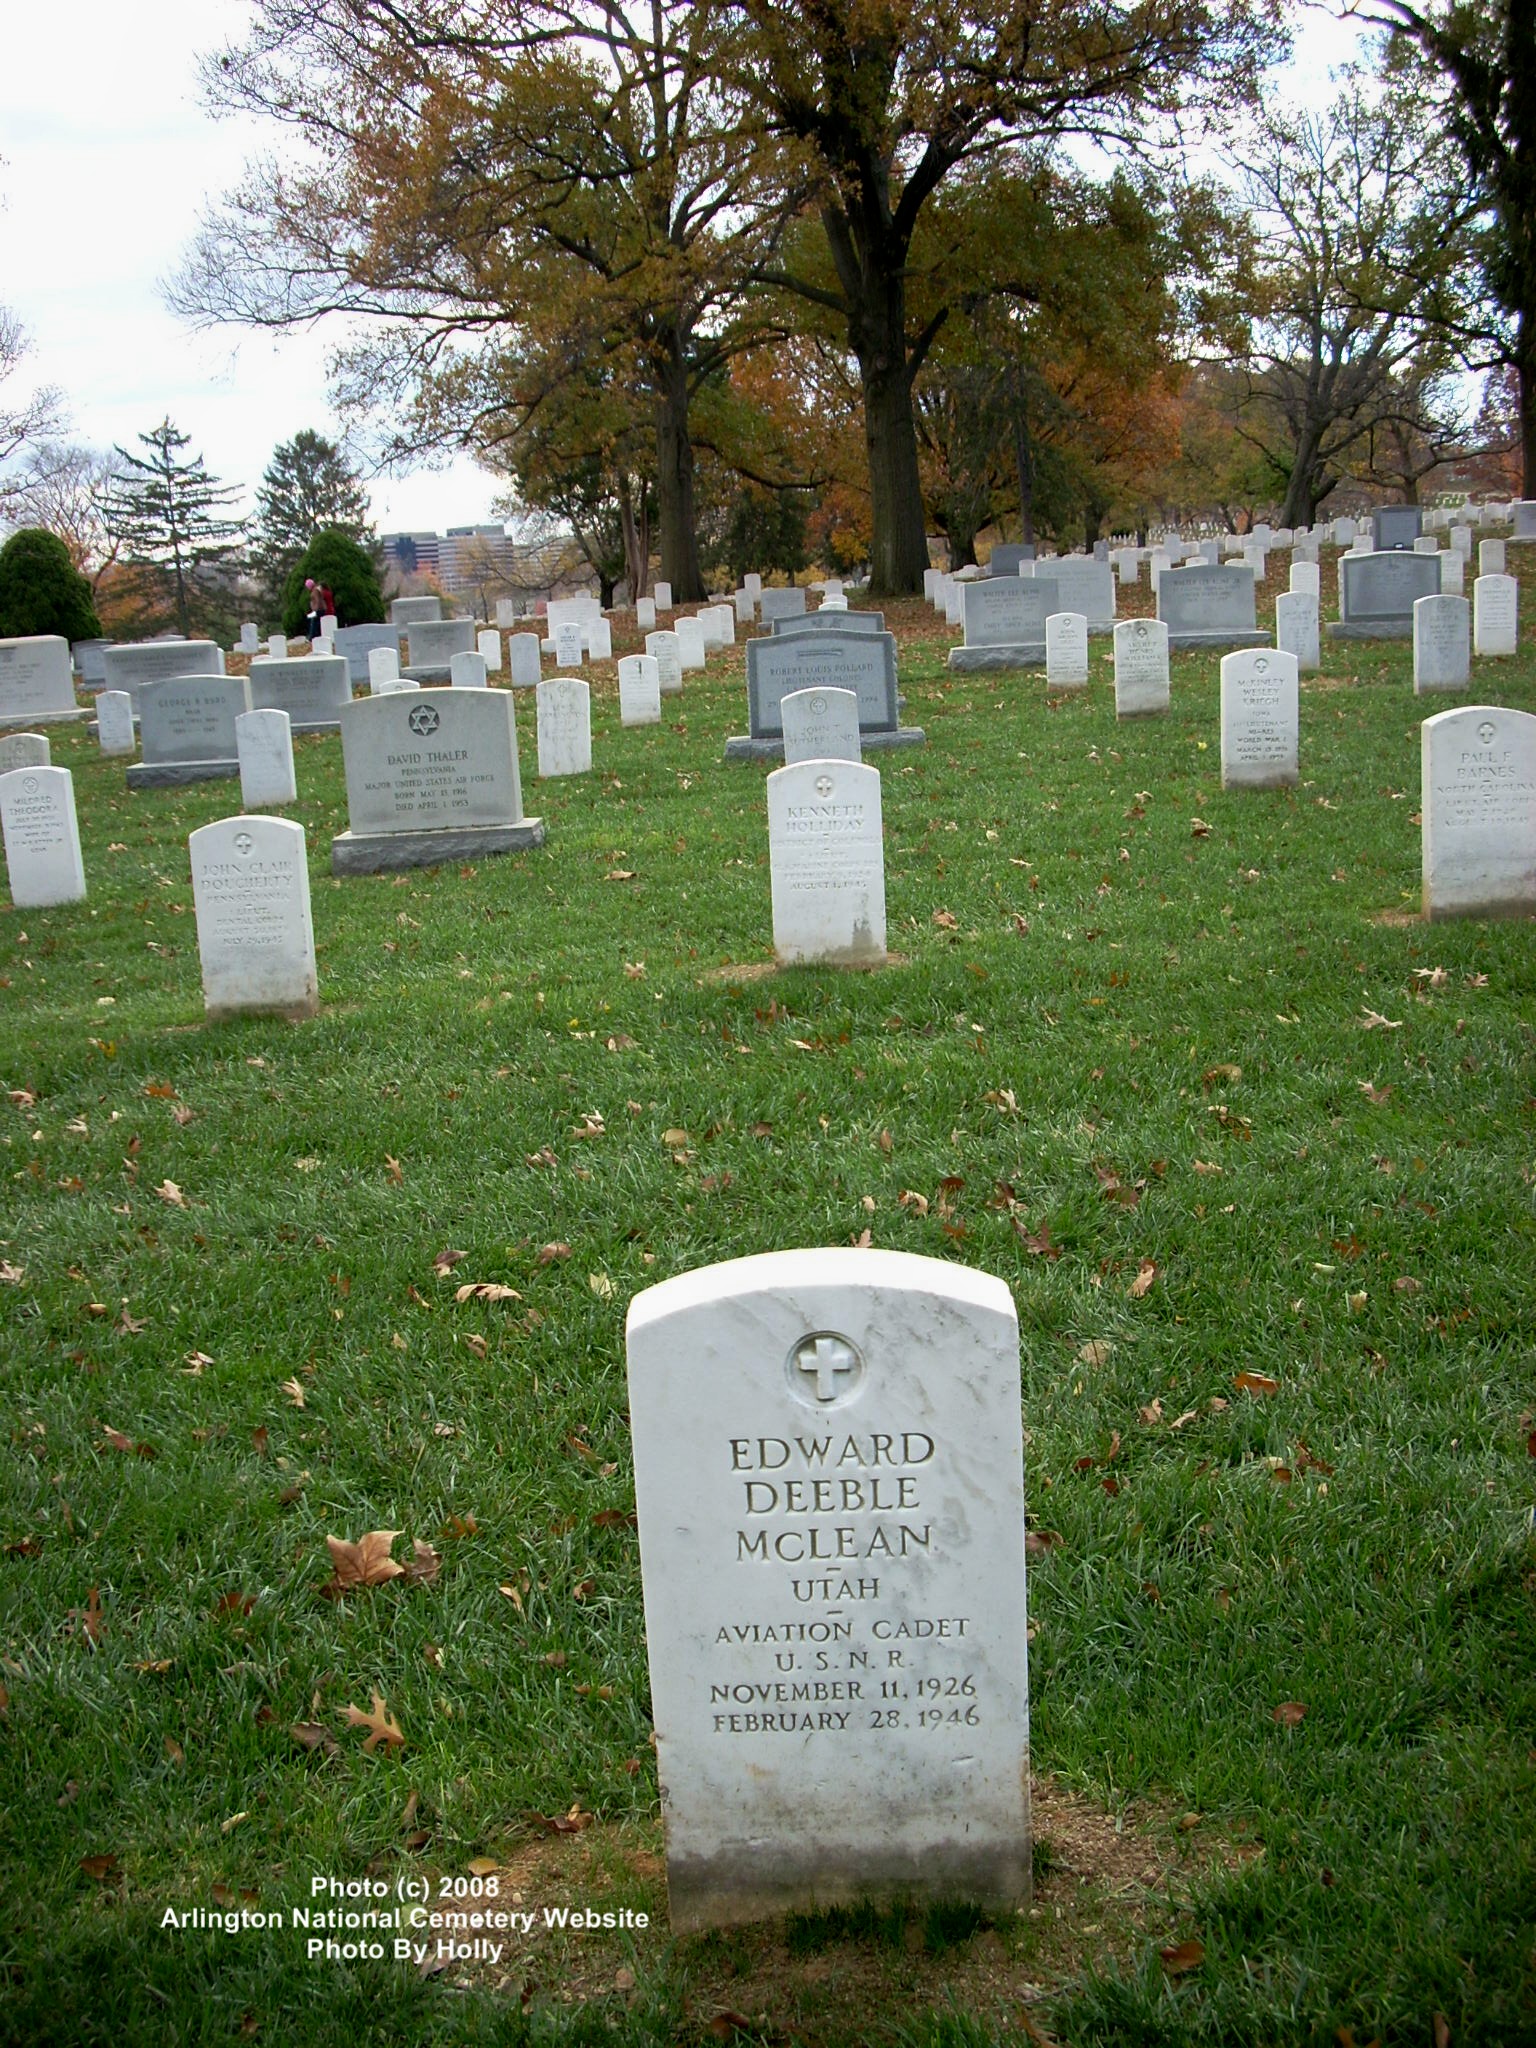 edmclean-gravesite-photo-november-2008-002